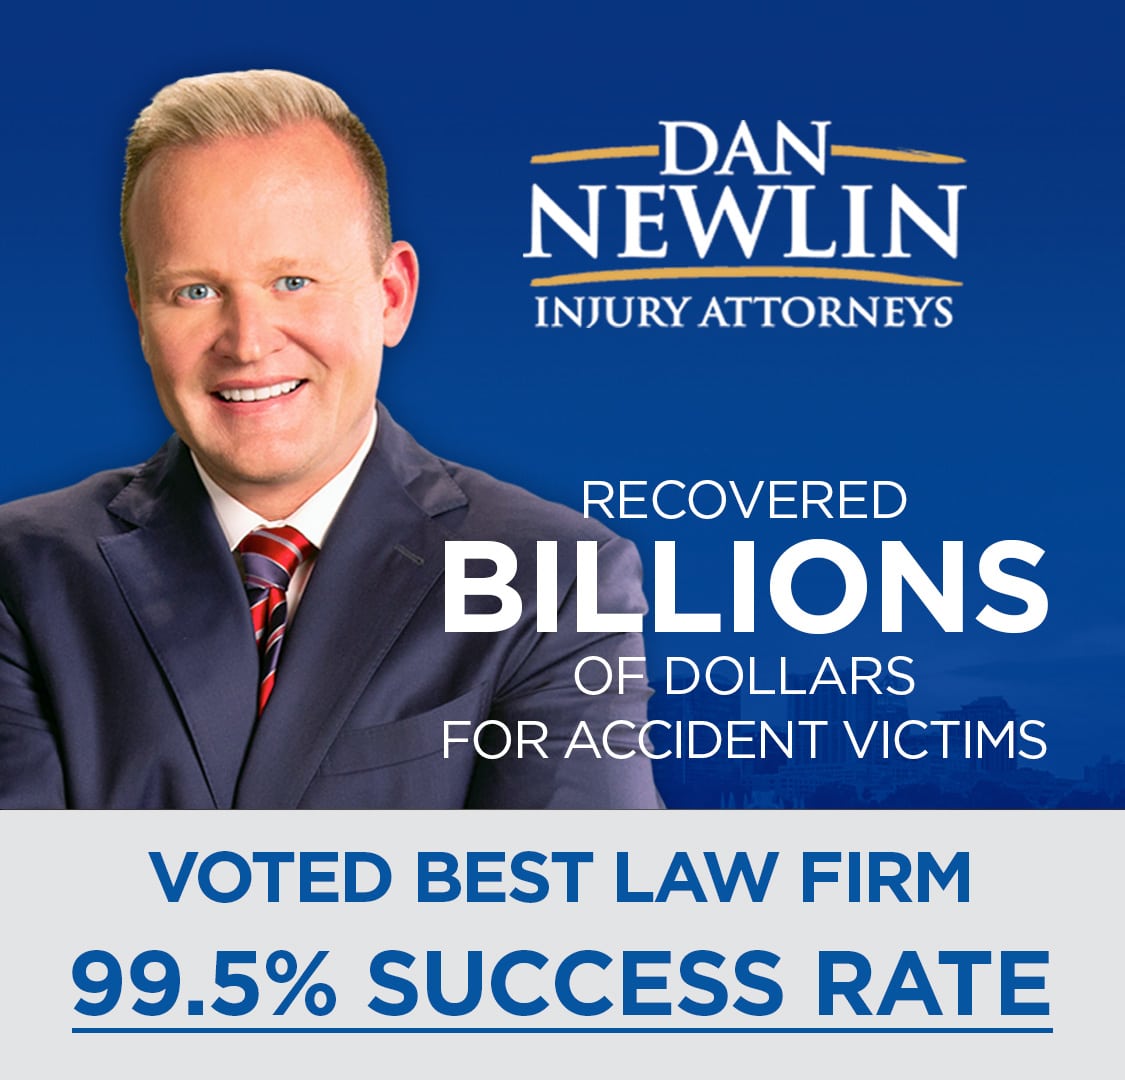 Dan Newlin Injury Attorneys - Billions Recovered